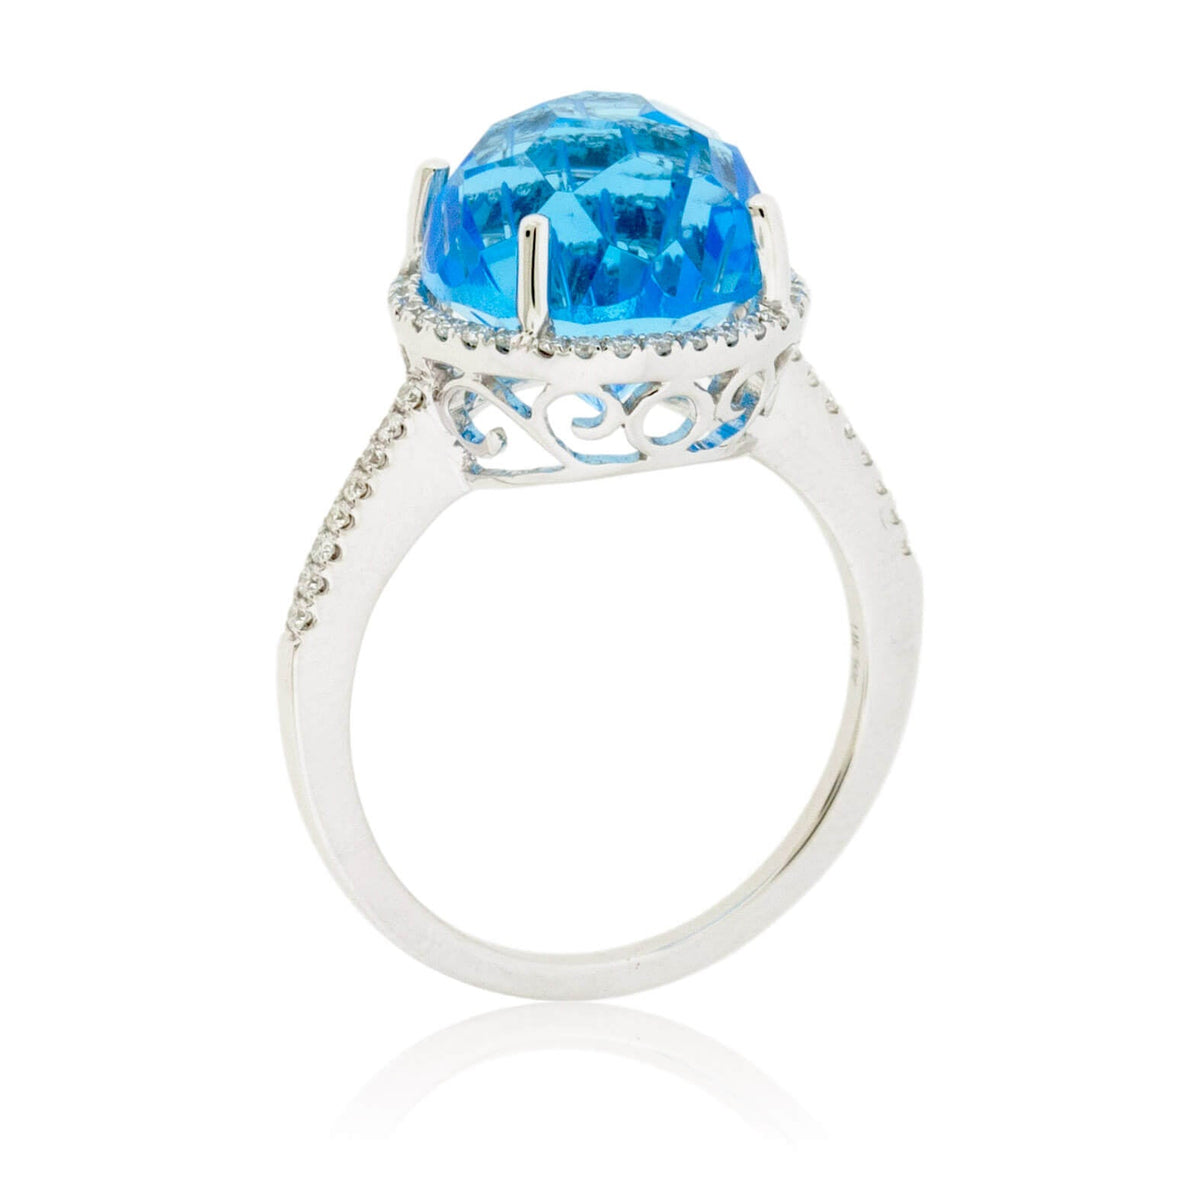 Fancy Daisy Cut Blue Topaz with Diamond Halo Ring - Park City Jewelers